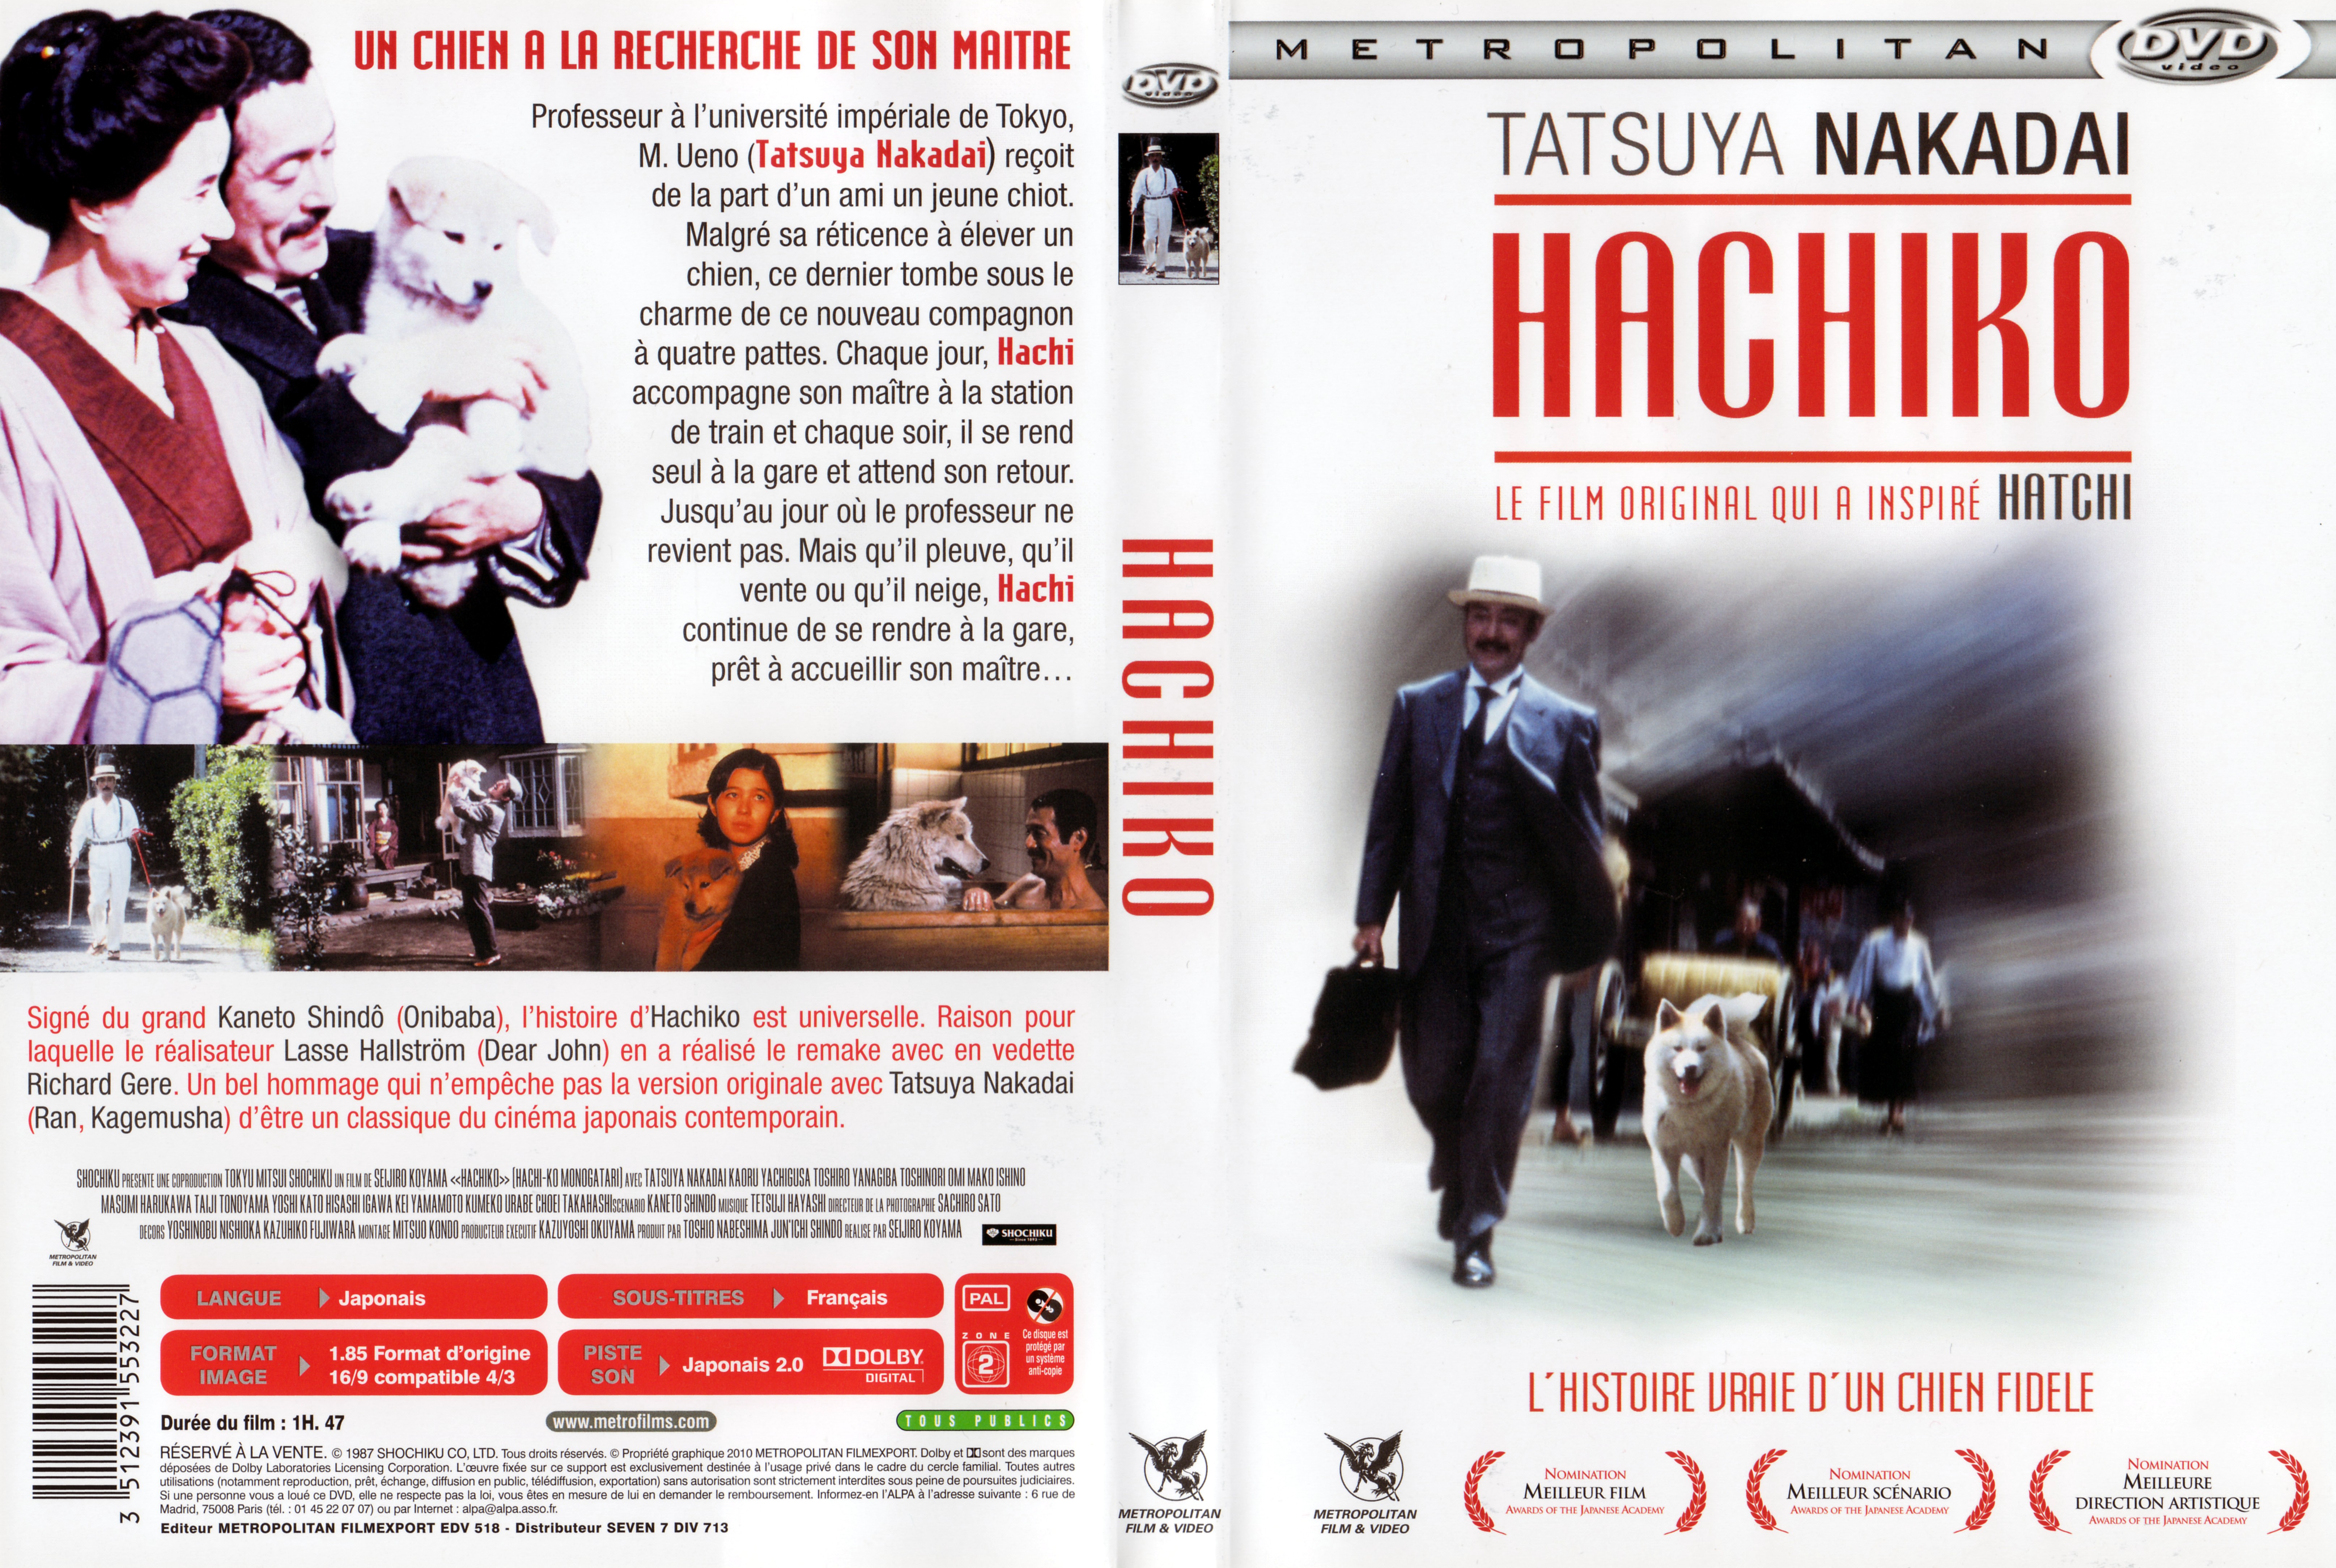 Jaquette DVD Hachiko